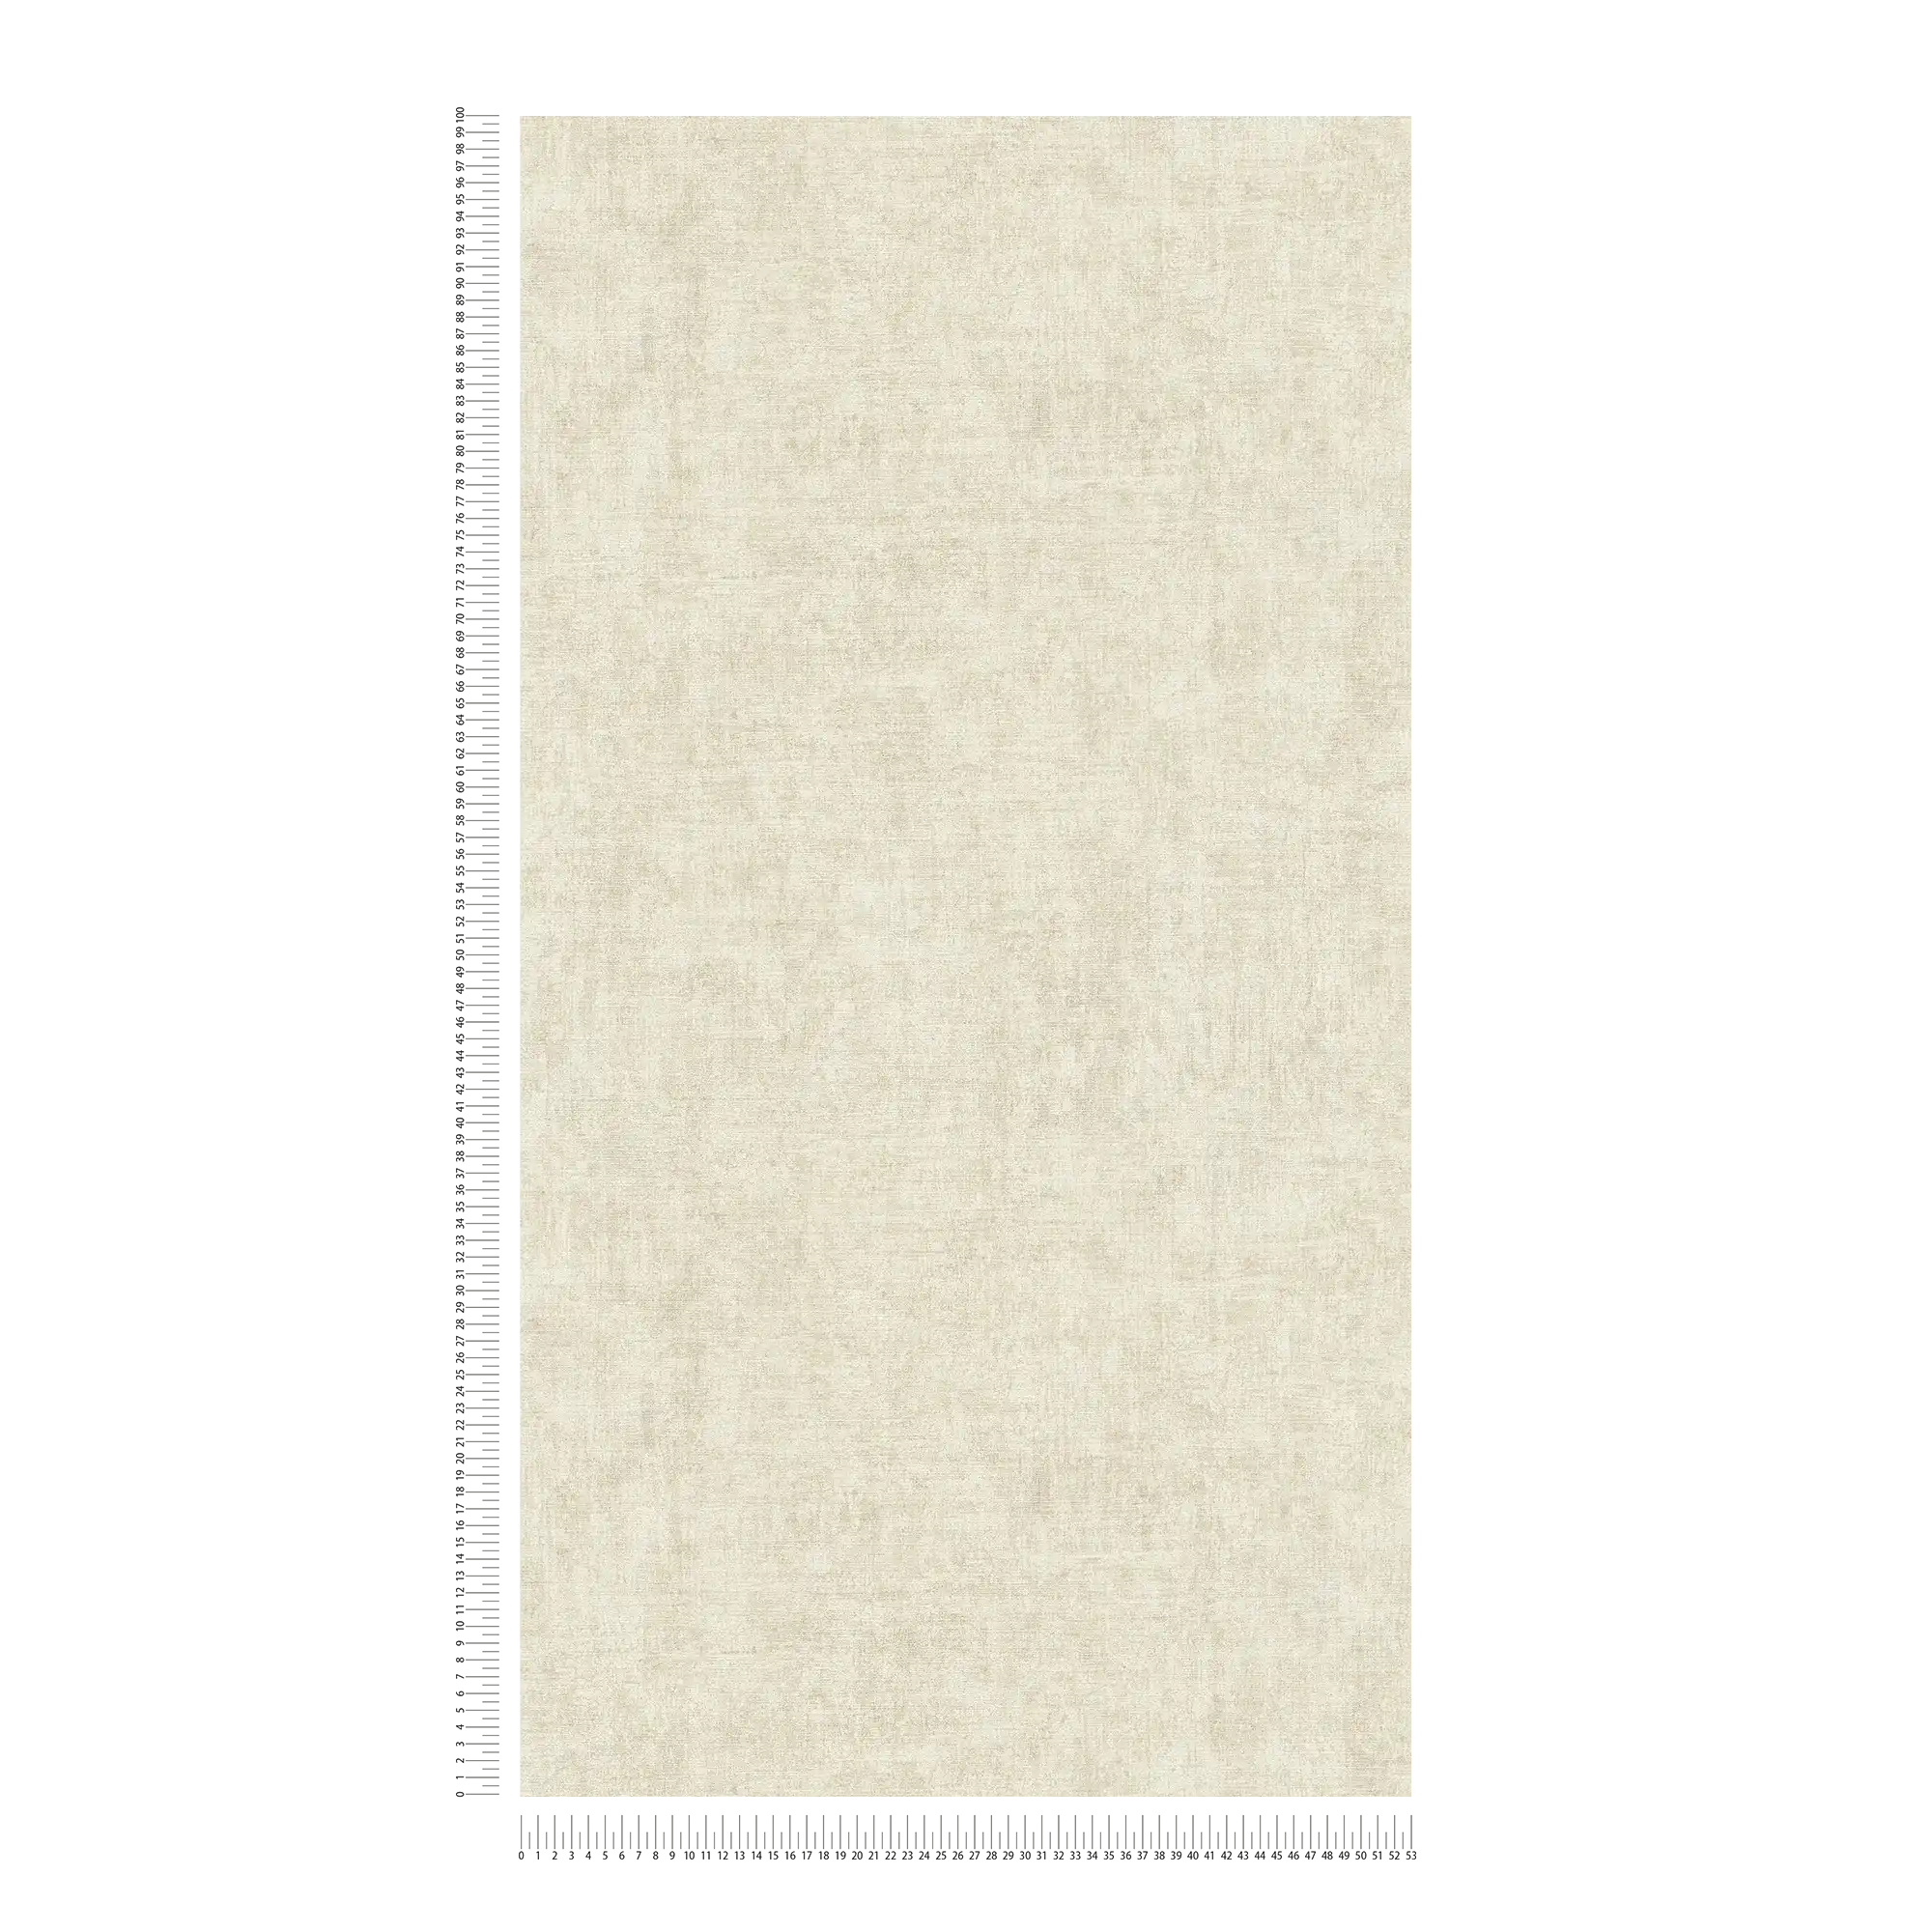             Carta da parati in tessuto non tessuto a tinta unita, screziata, strutturata - crema
        